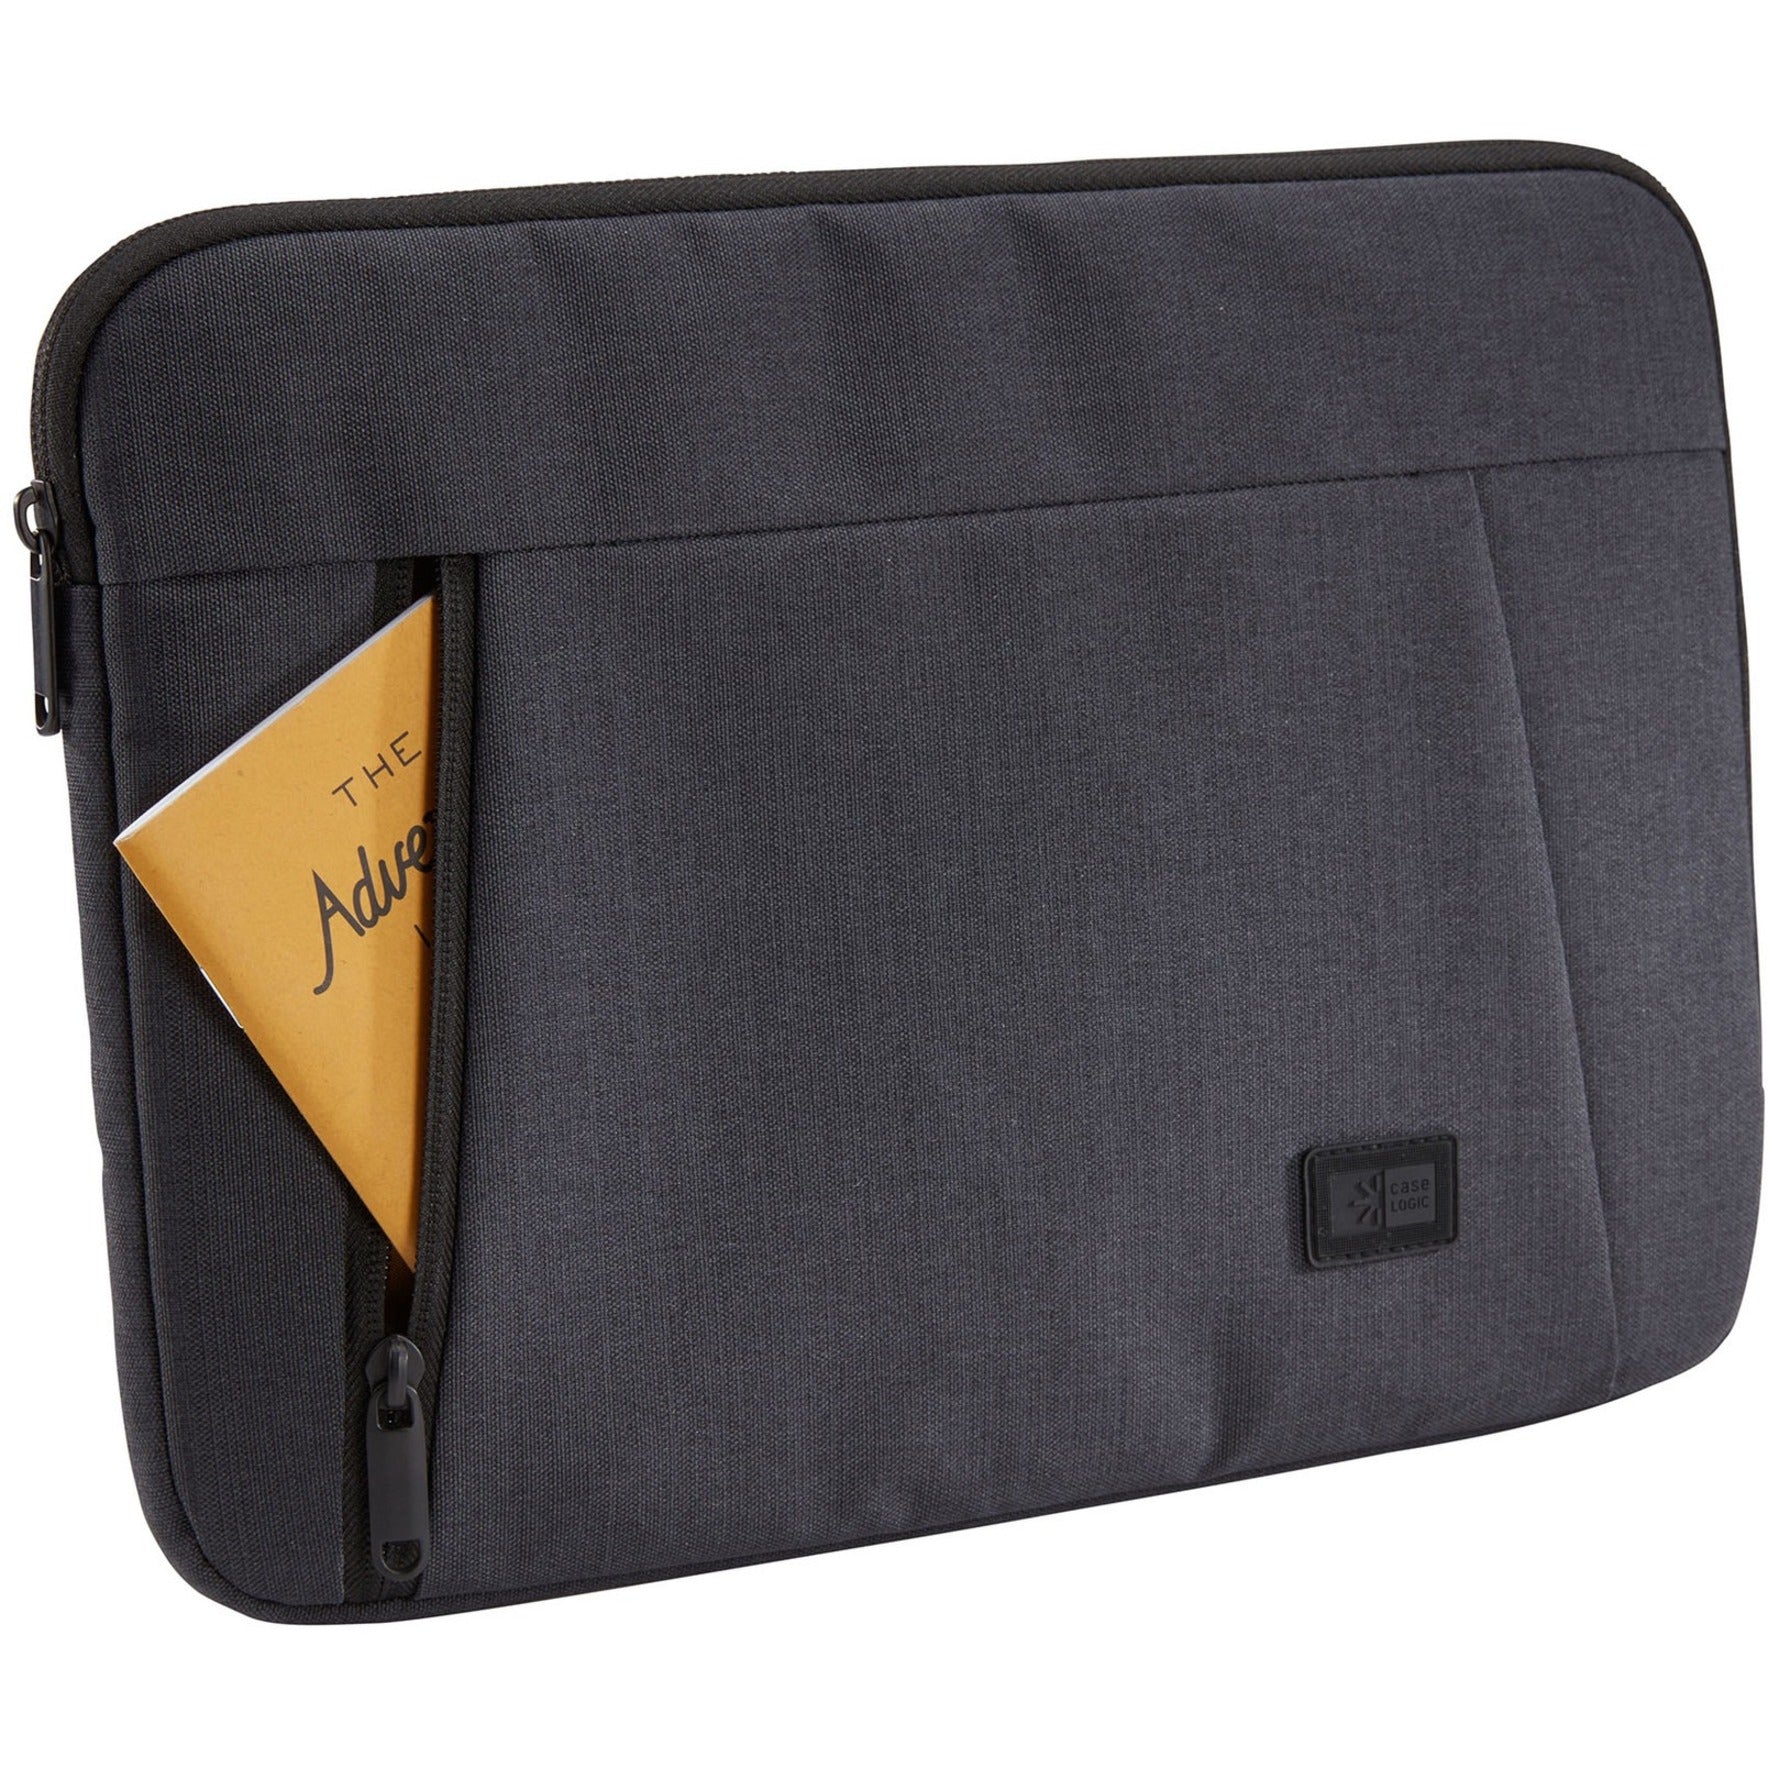 Case Logic 3204713 Huxton 11.6" Laptop Sleeve, Black Polyester, Zipper Closure